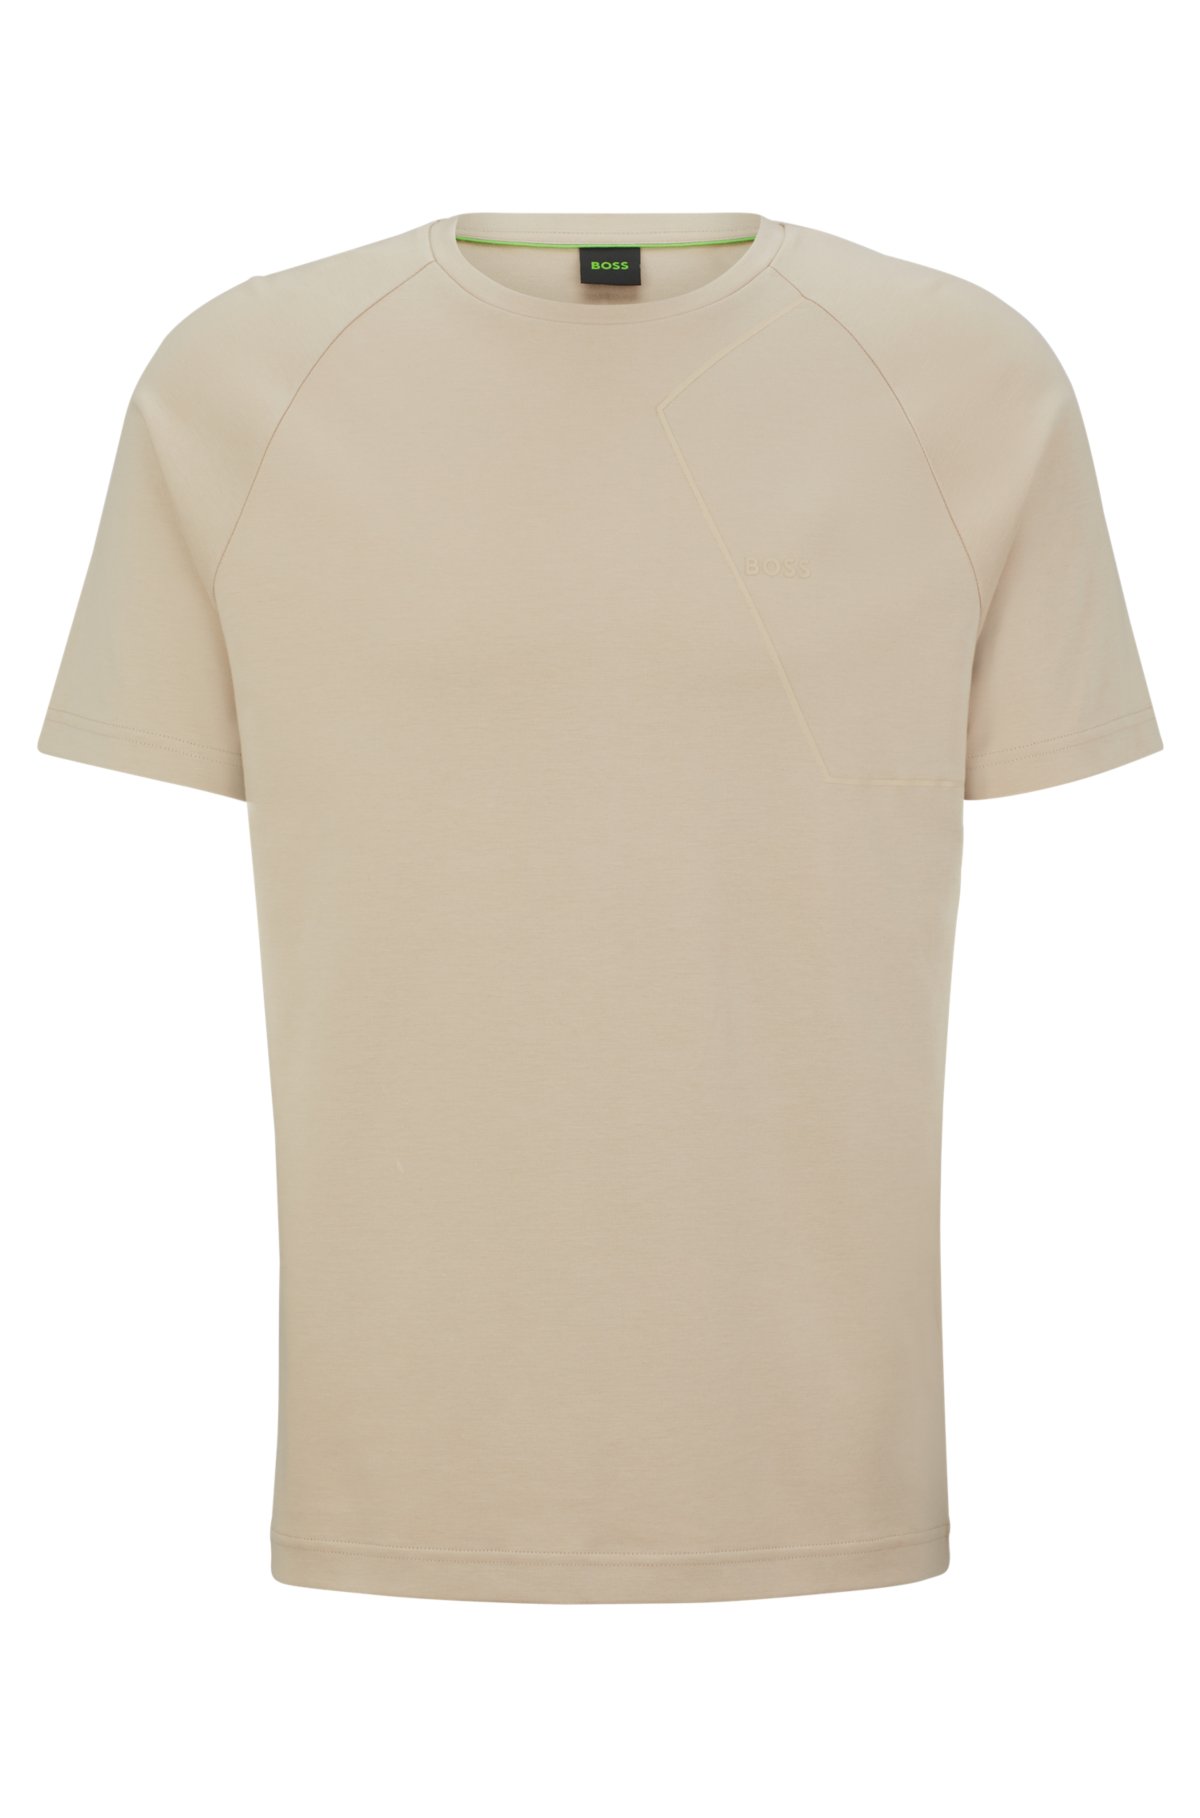 gloss-print BOSS T-shirt with - Peppermint-finish cotton artwork